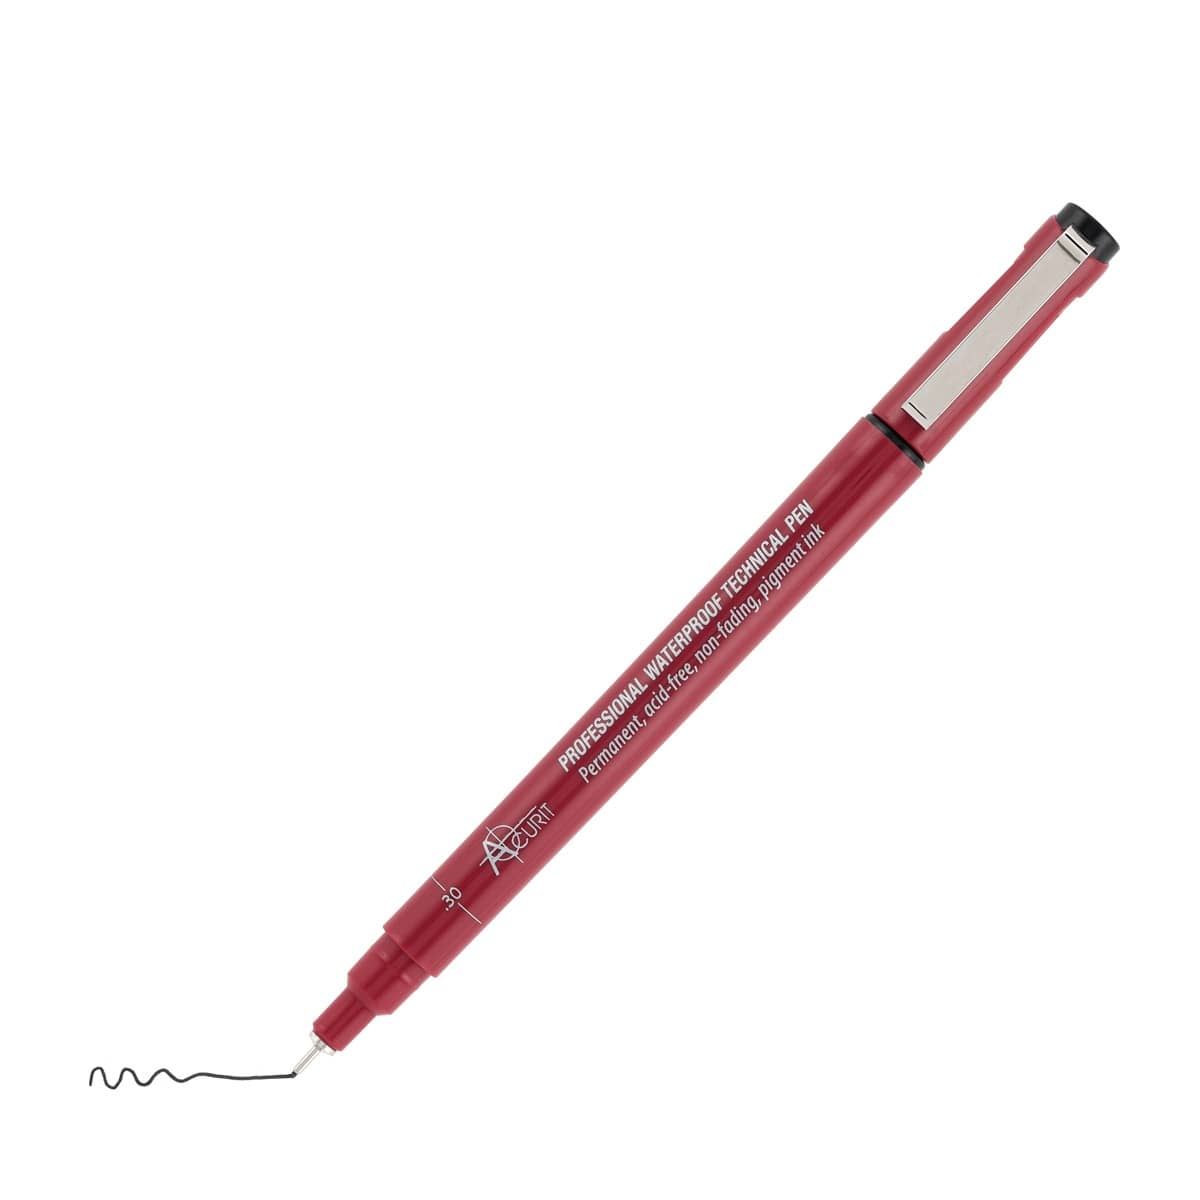 Acurit waterproof technical pens 0.3mm